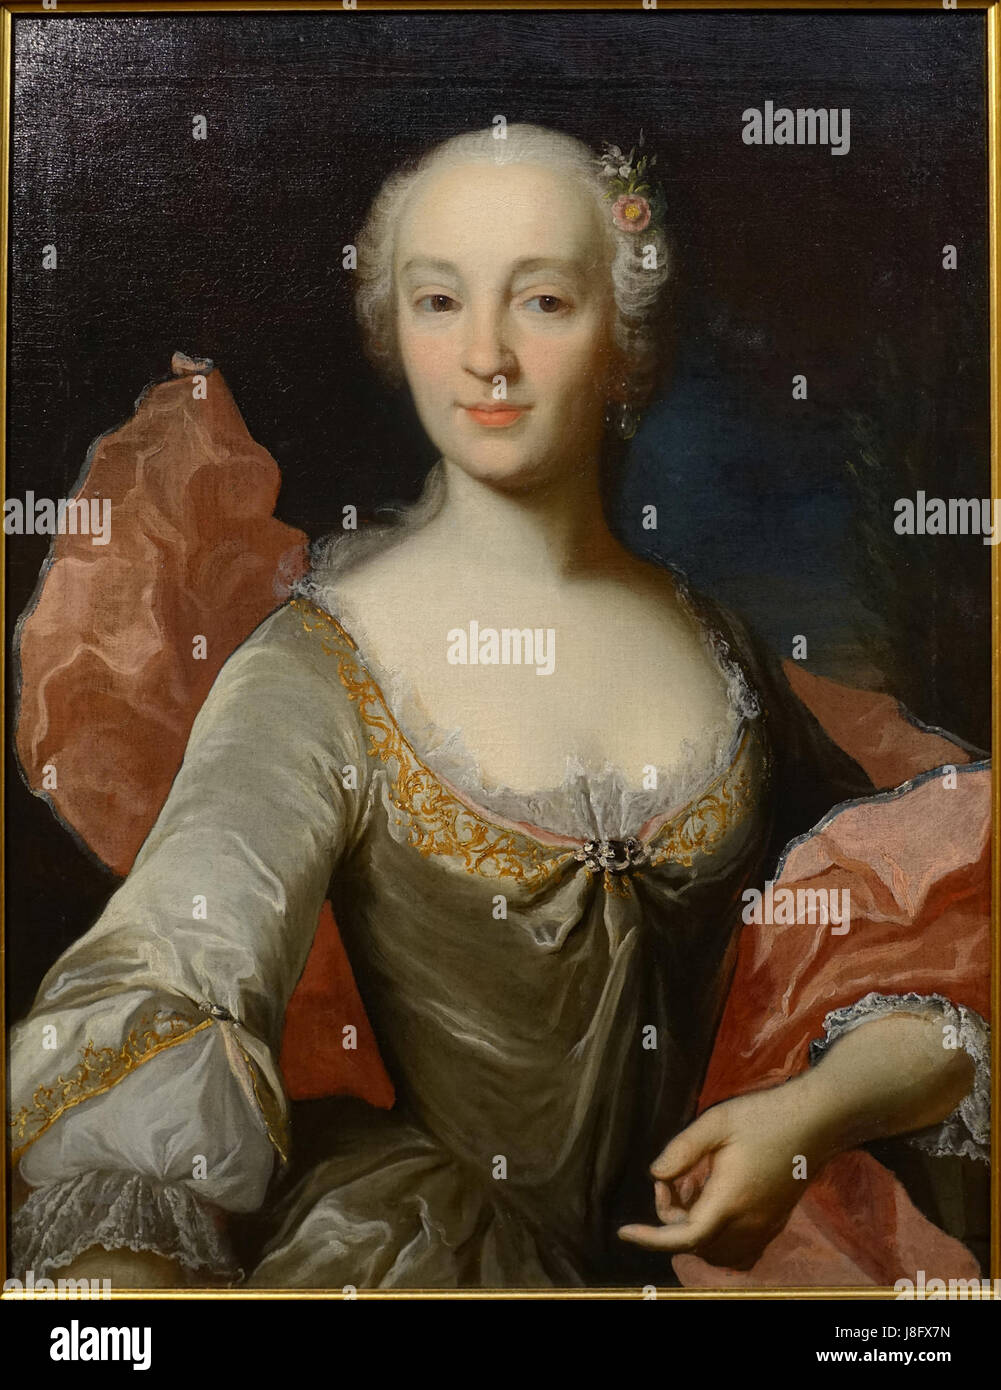 Half length portrait of a young lady, artist unknown, 1700s, oil on canvas   Villa Vauban   Luxembourg City   DSC06461 Stock Photo